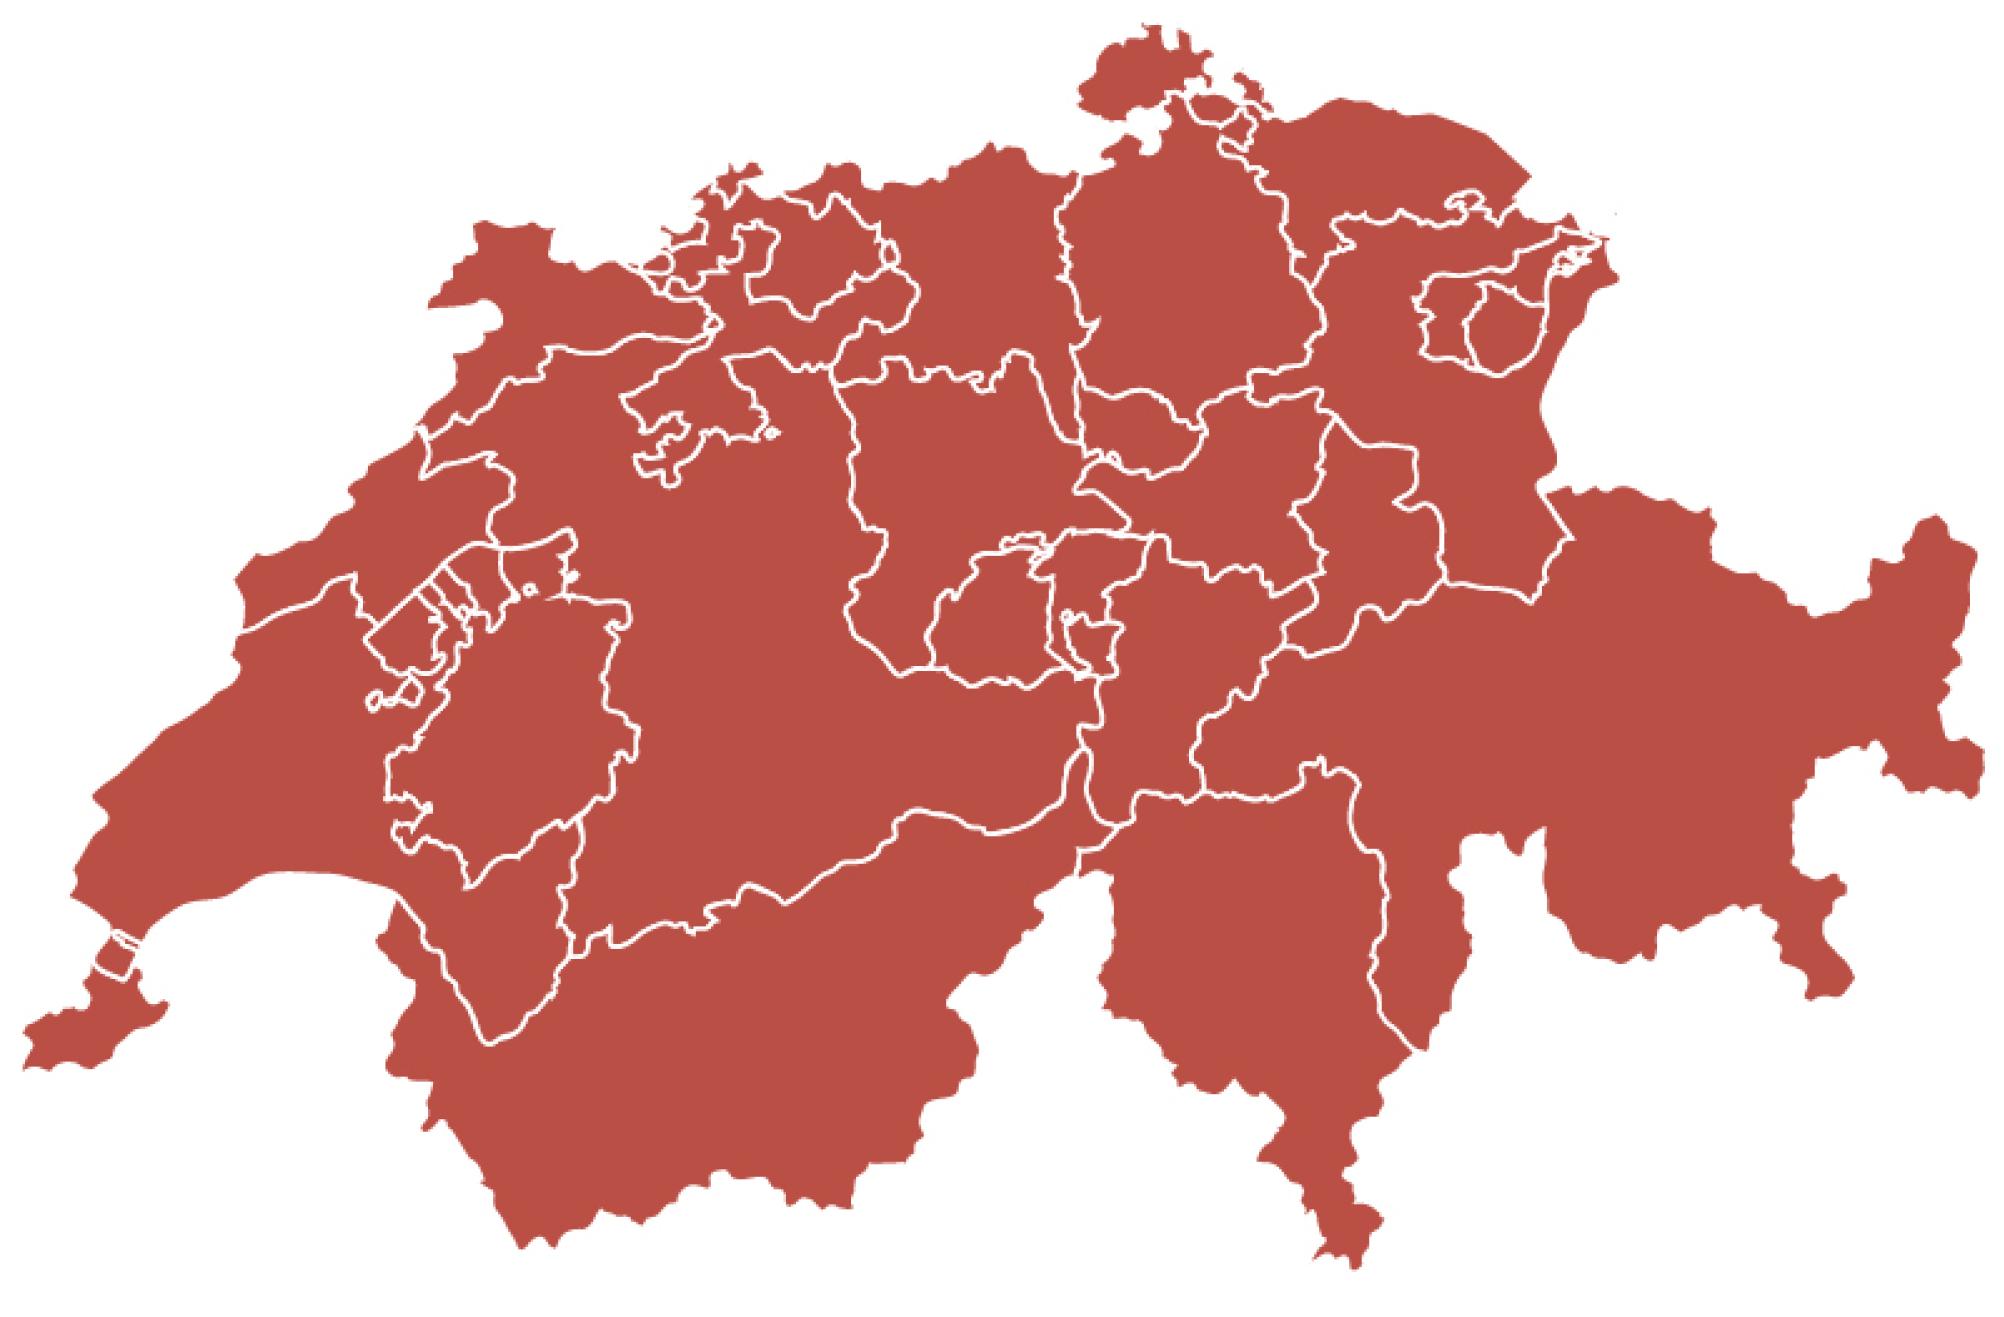 La seconda cartina mostra anche i confini cantonali.